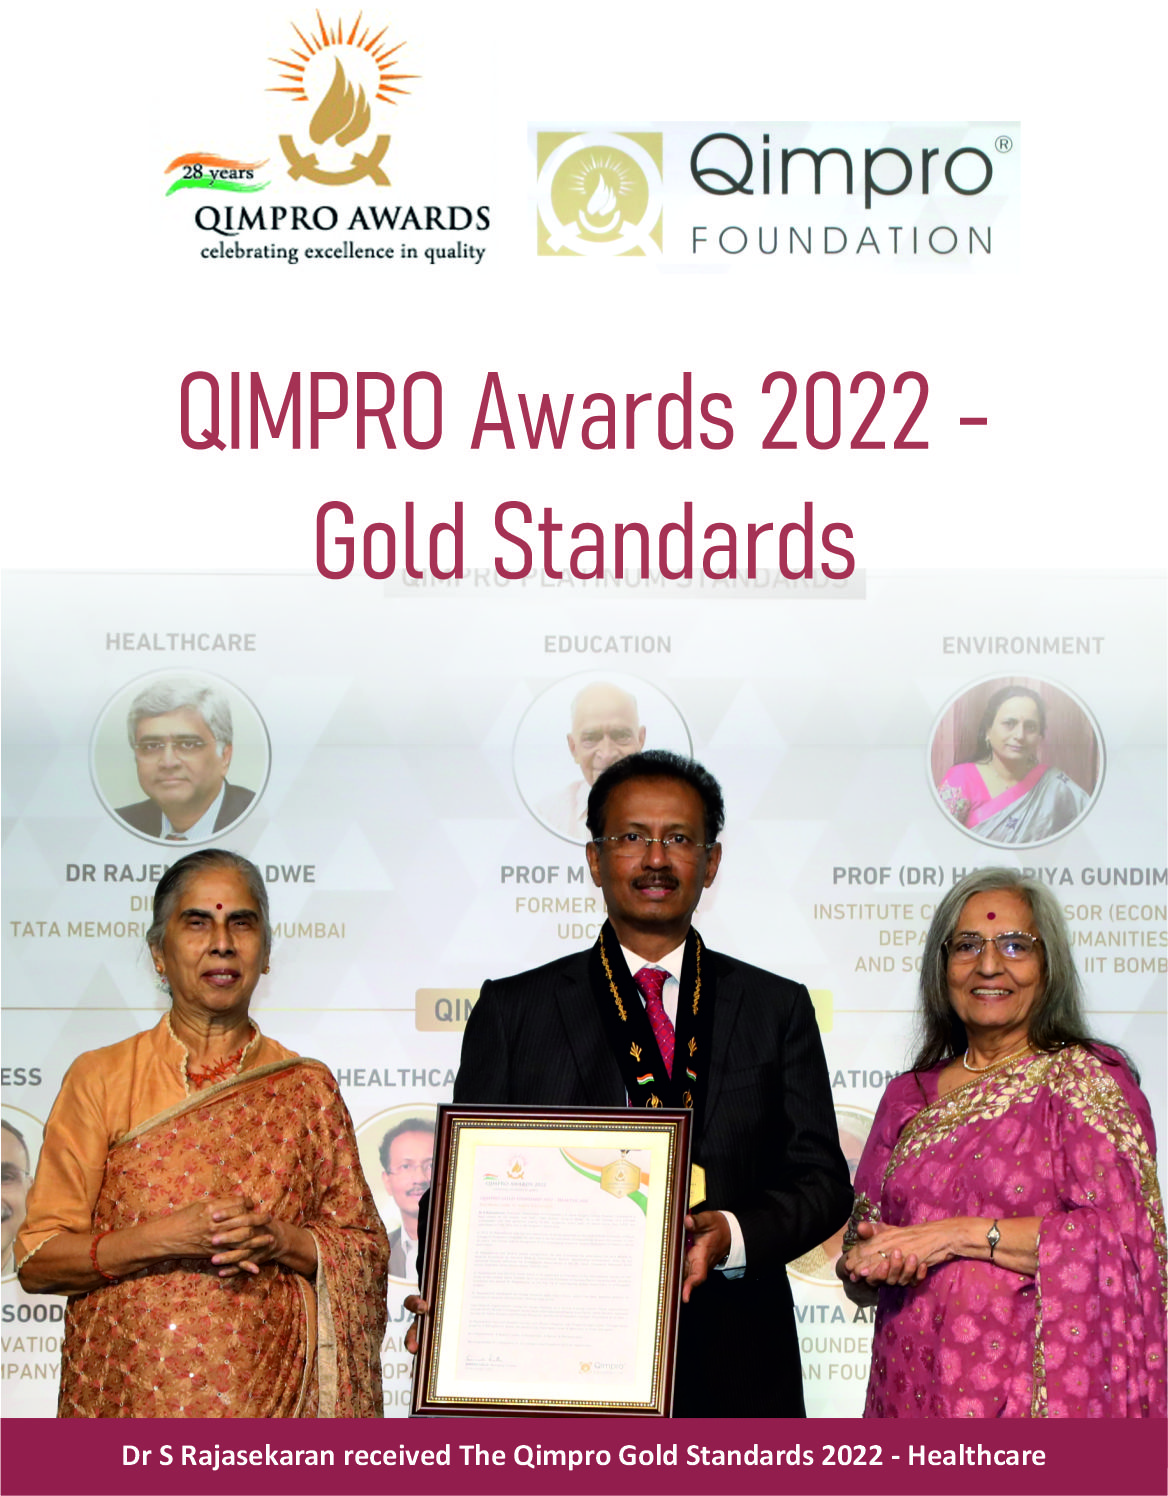 QIMPRO Awards 2022 - Gold Standards - Dr Rajasekaran